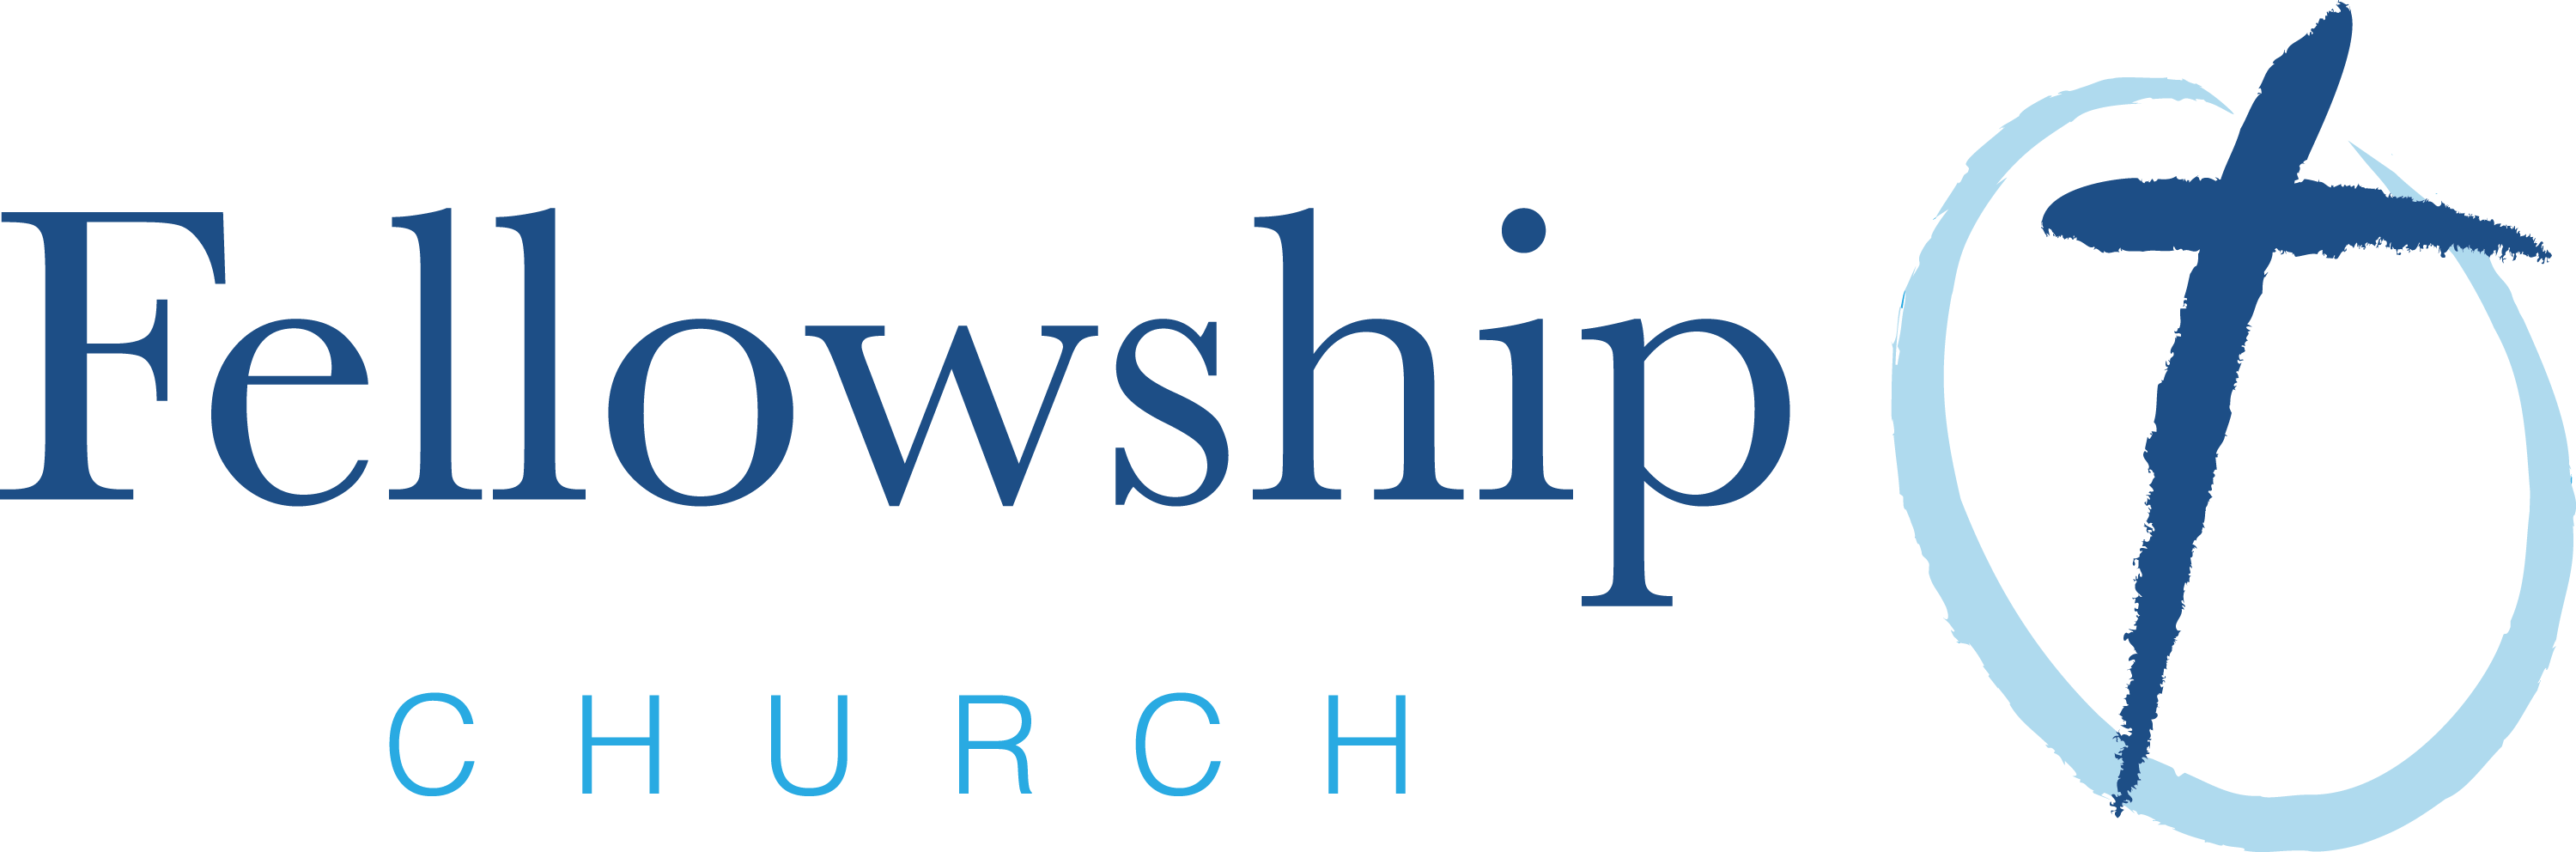 Fellowship Church, Dallas, PA Podcast